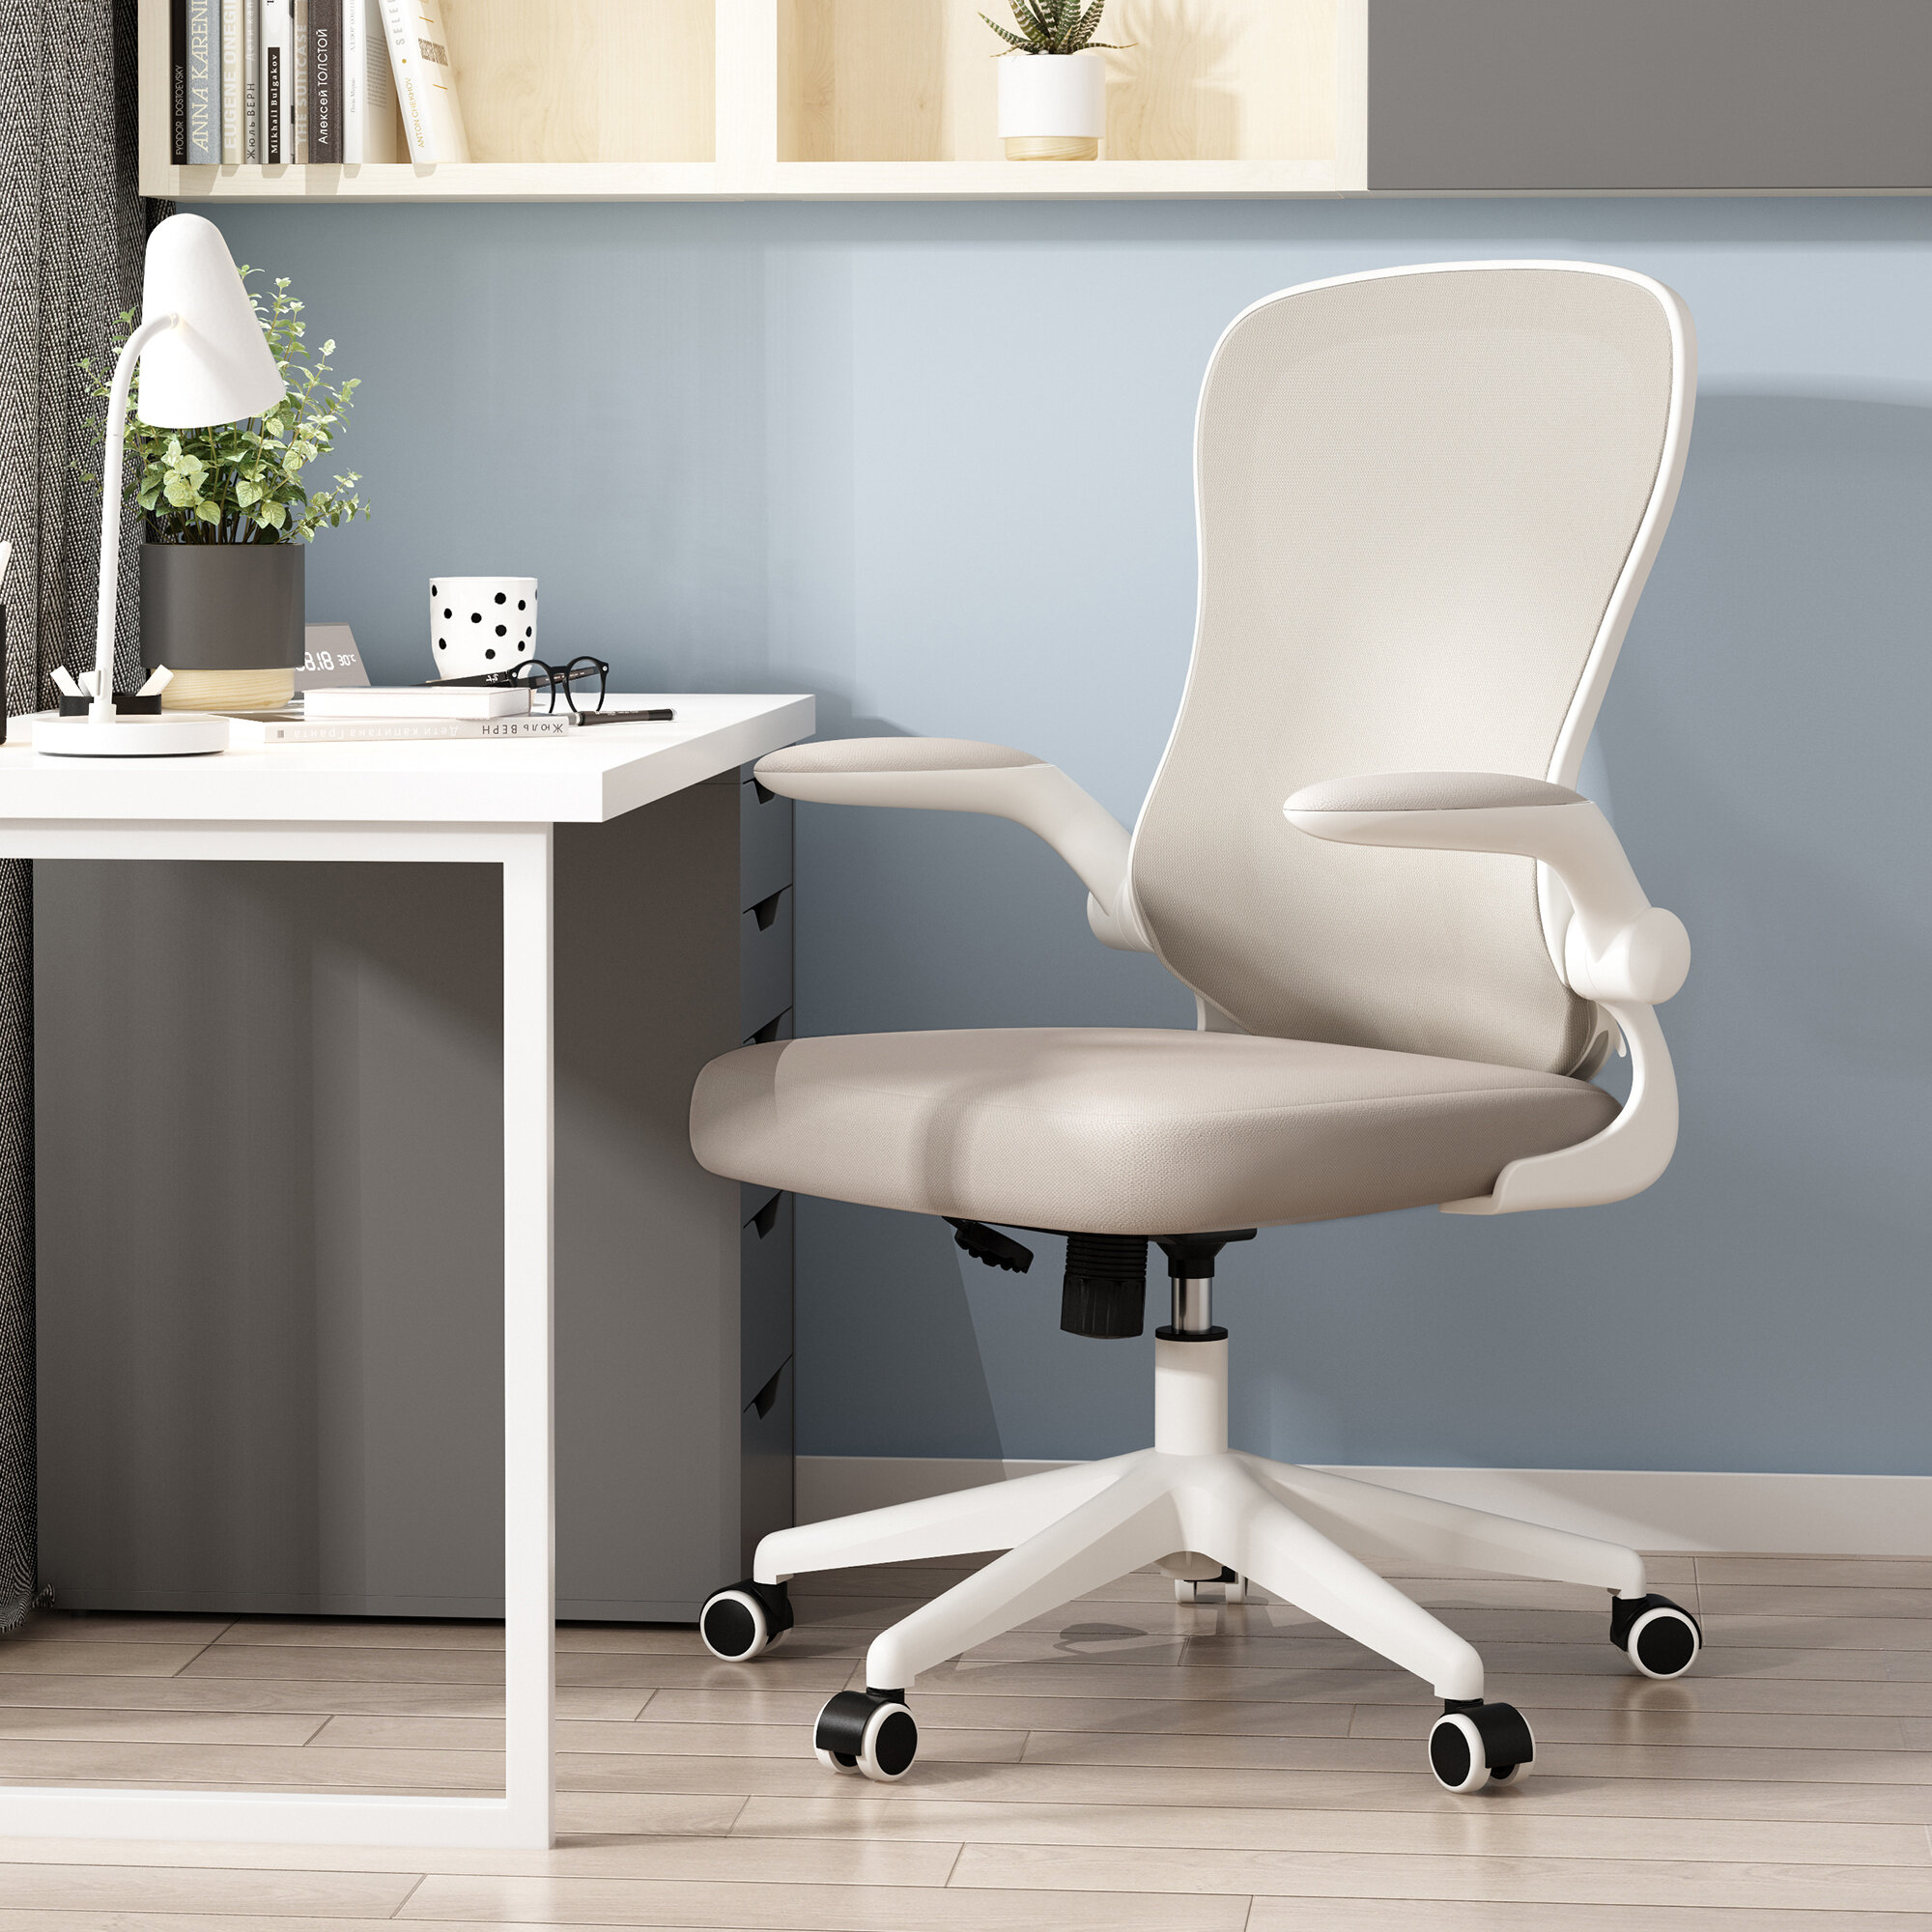 Faye Ergonomic Task Chair Inbox Zero Frame Color: White, Upholstery Color: Gray